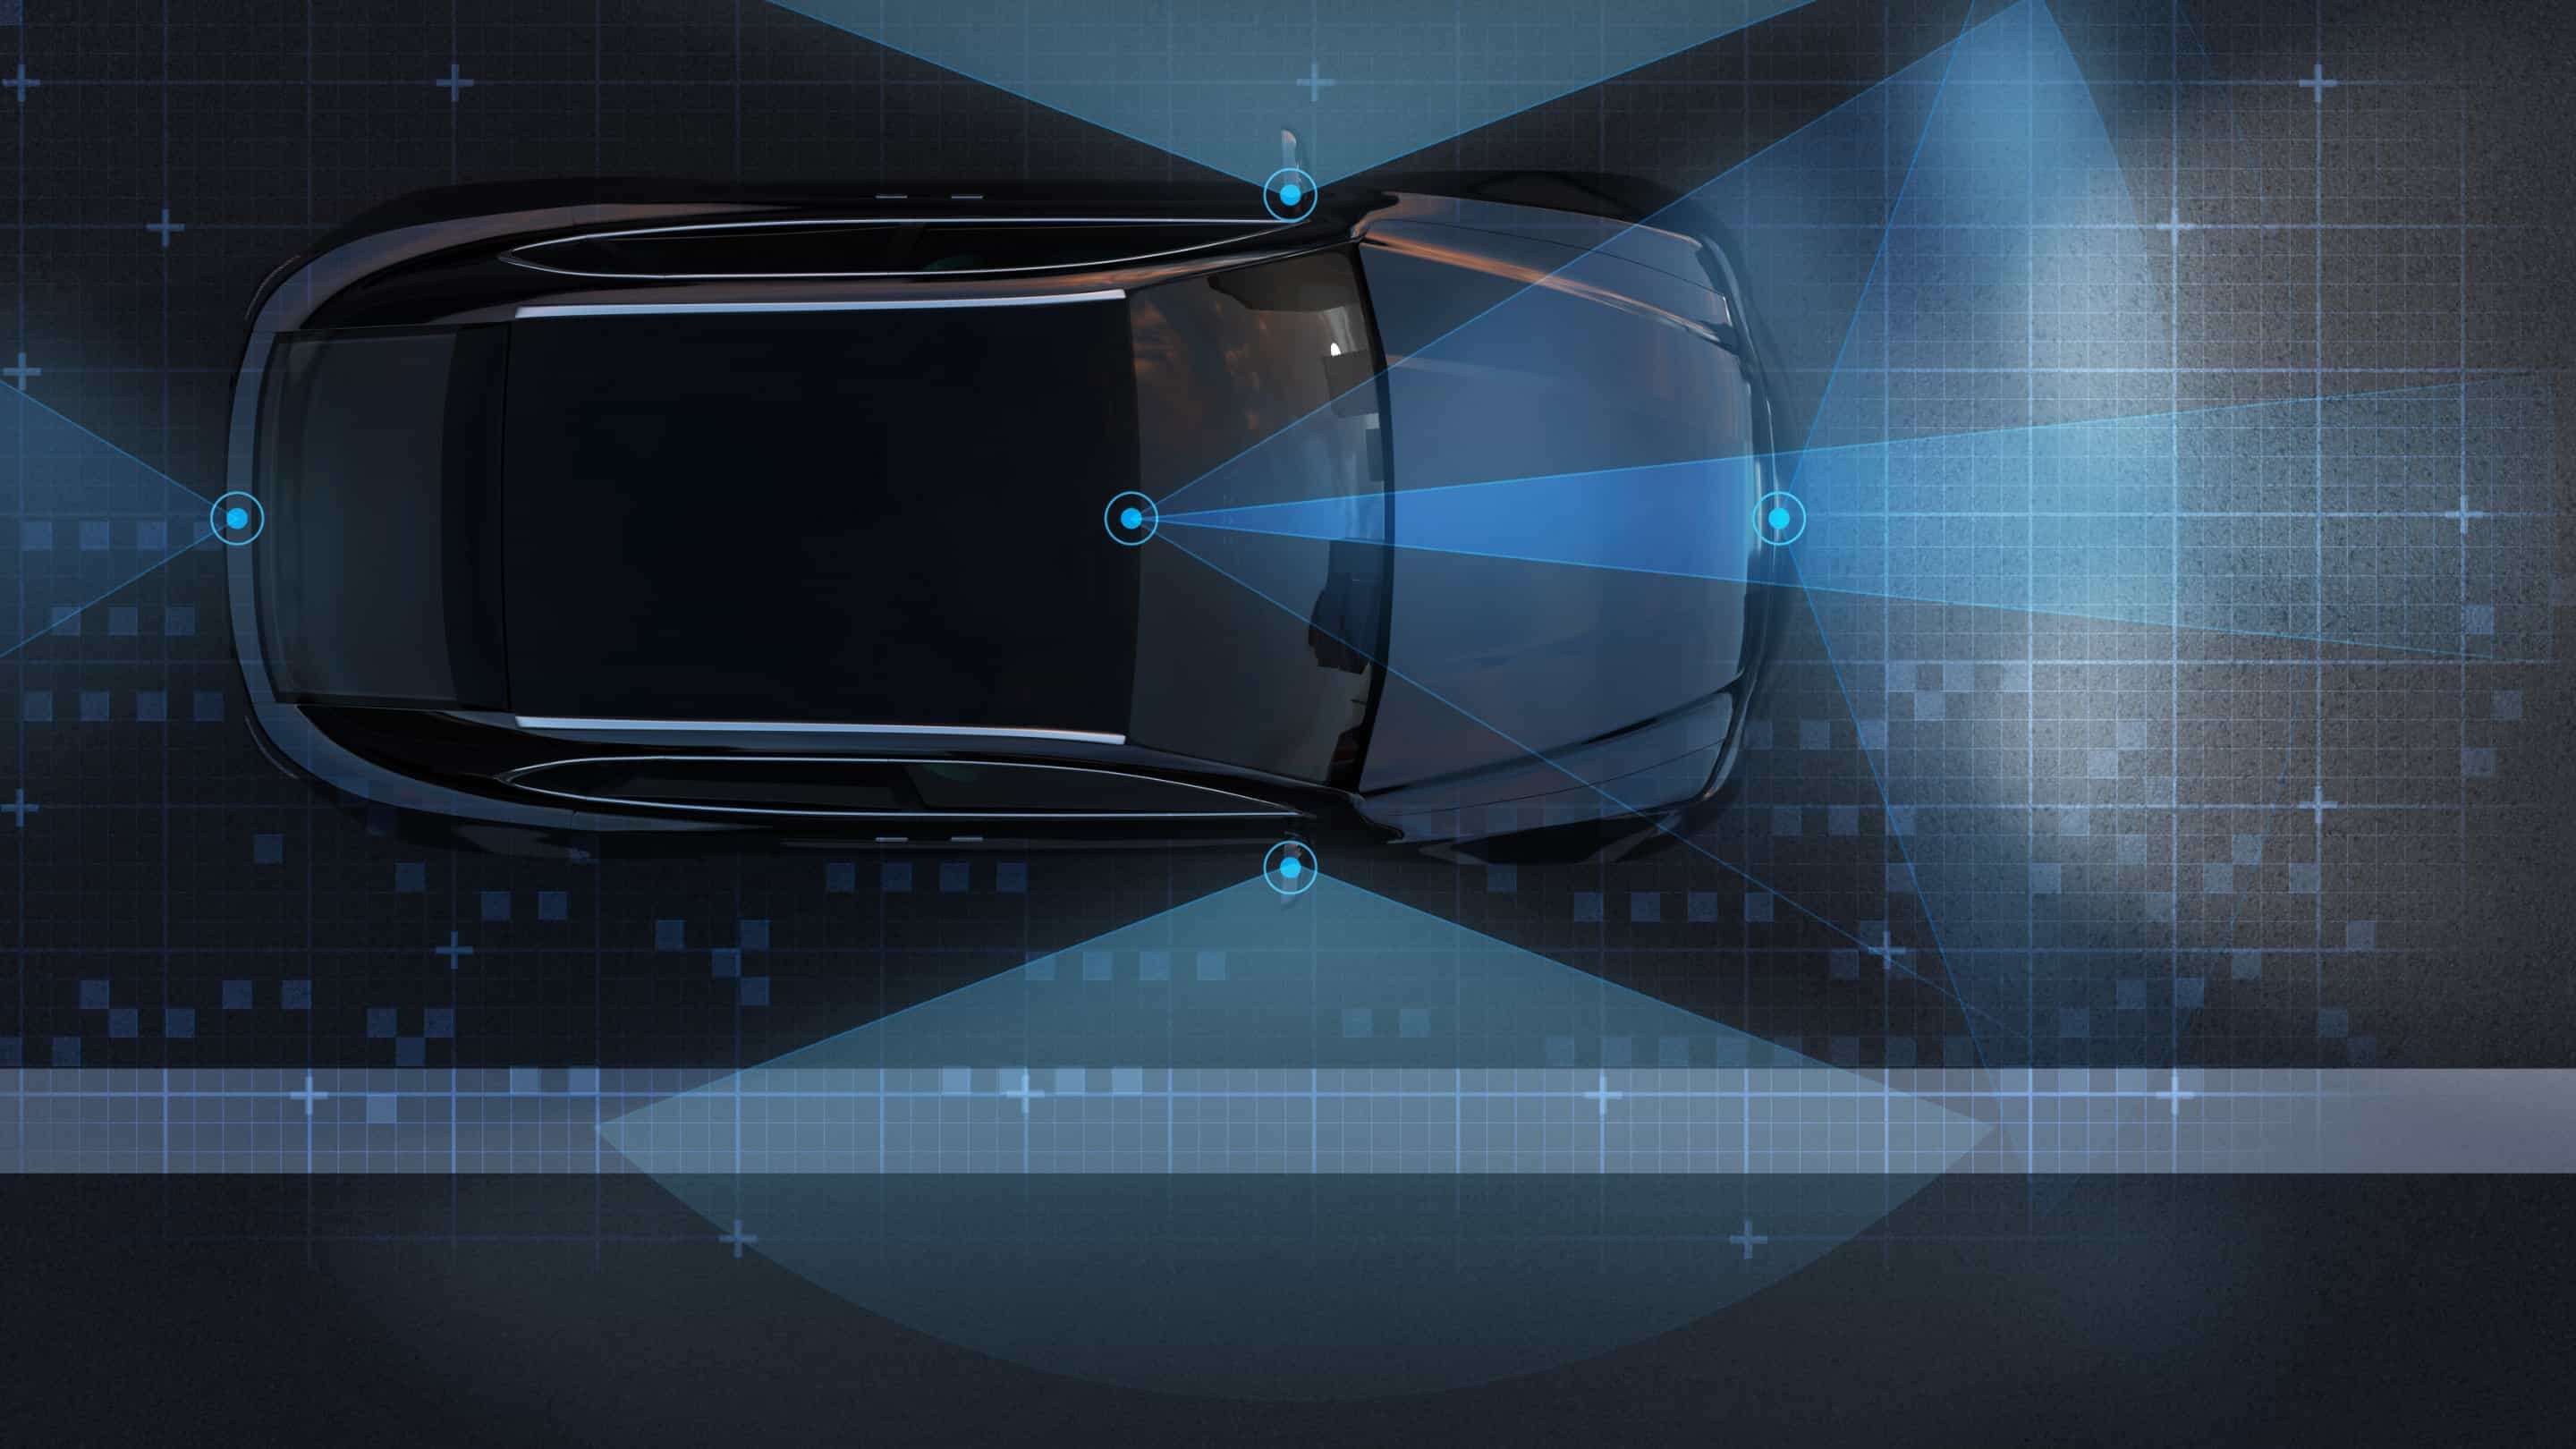 Impactinator® Glass - Lidar sensor protective glass a car with blue lines and dots